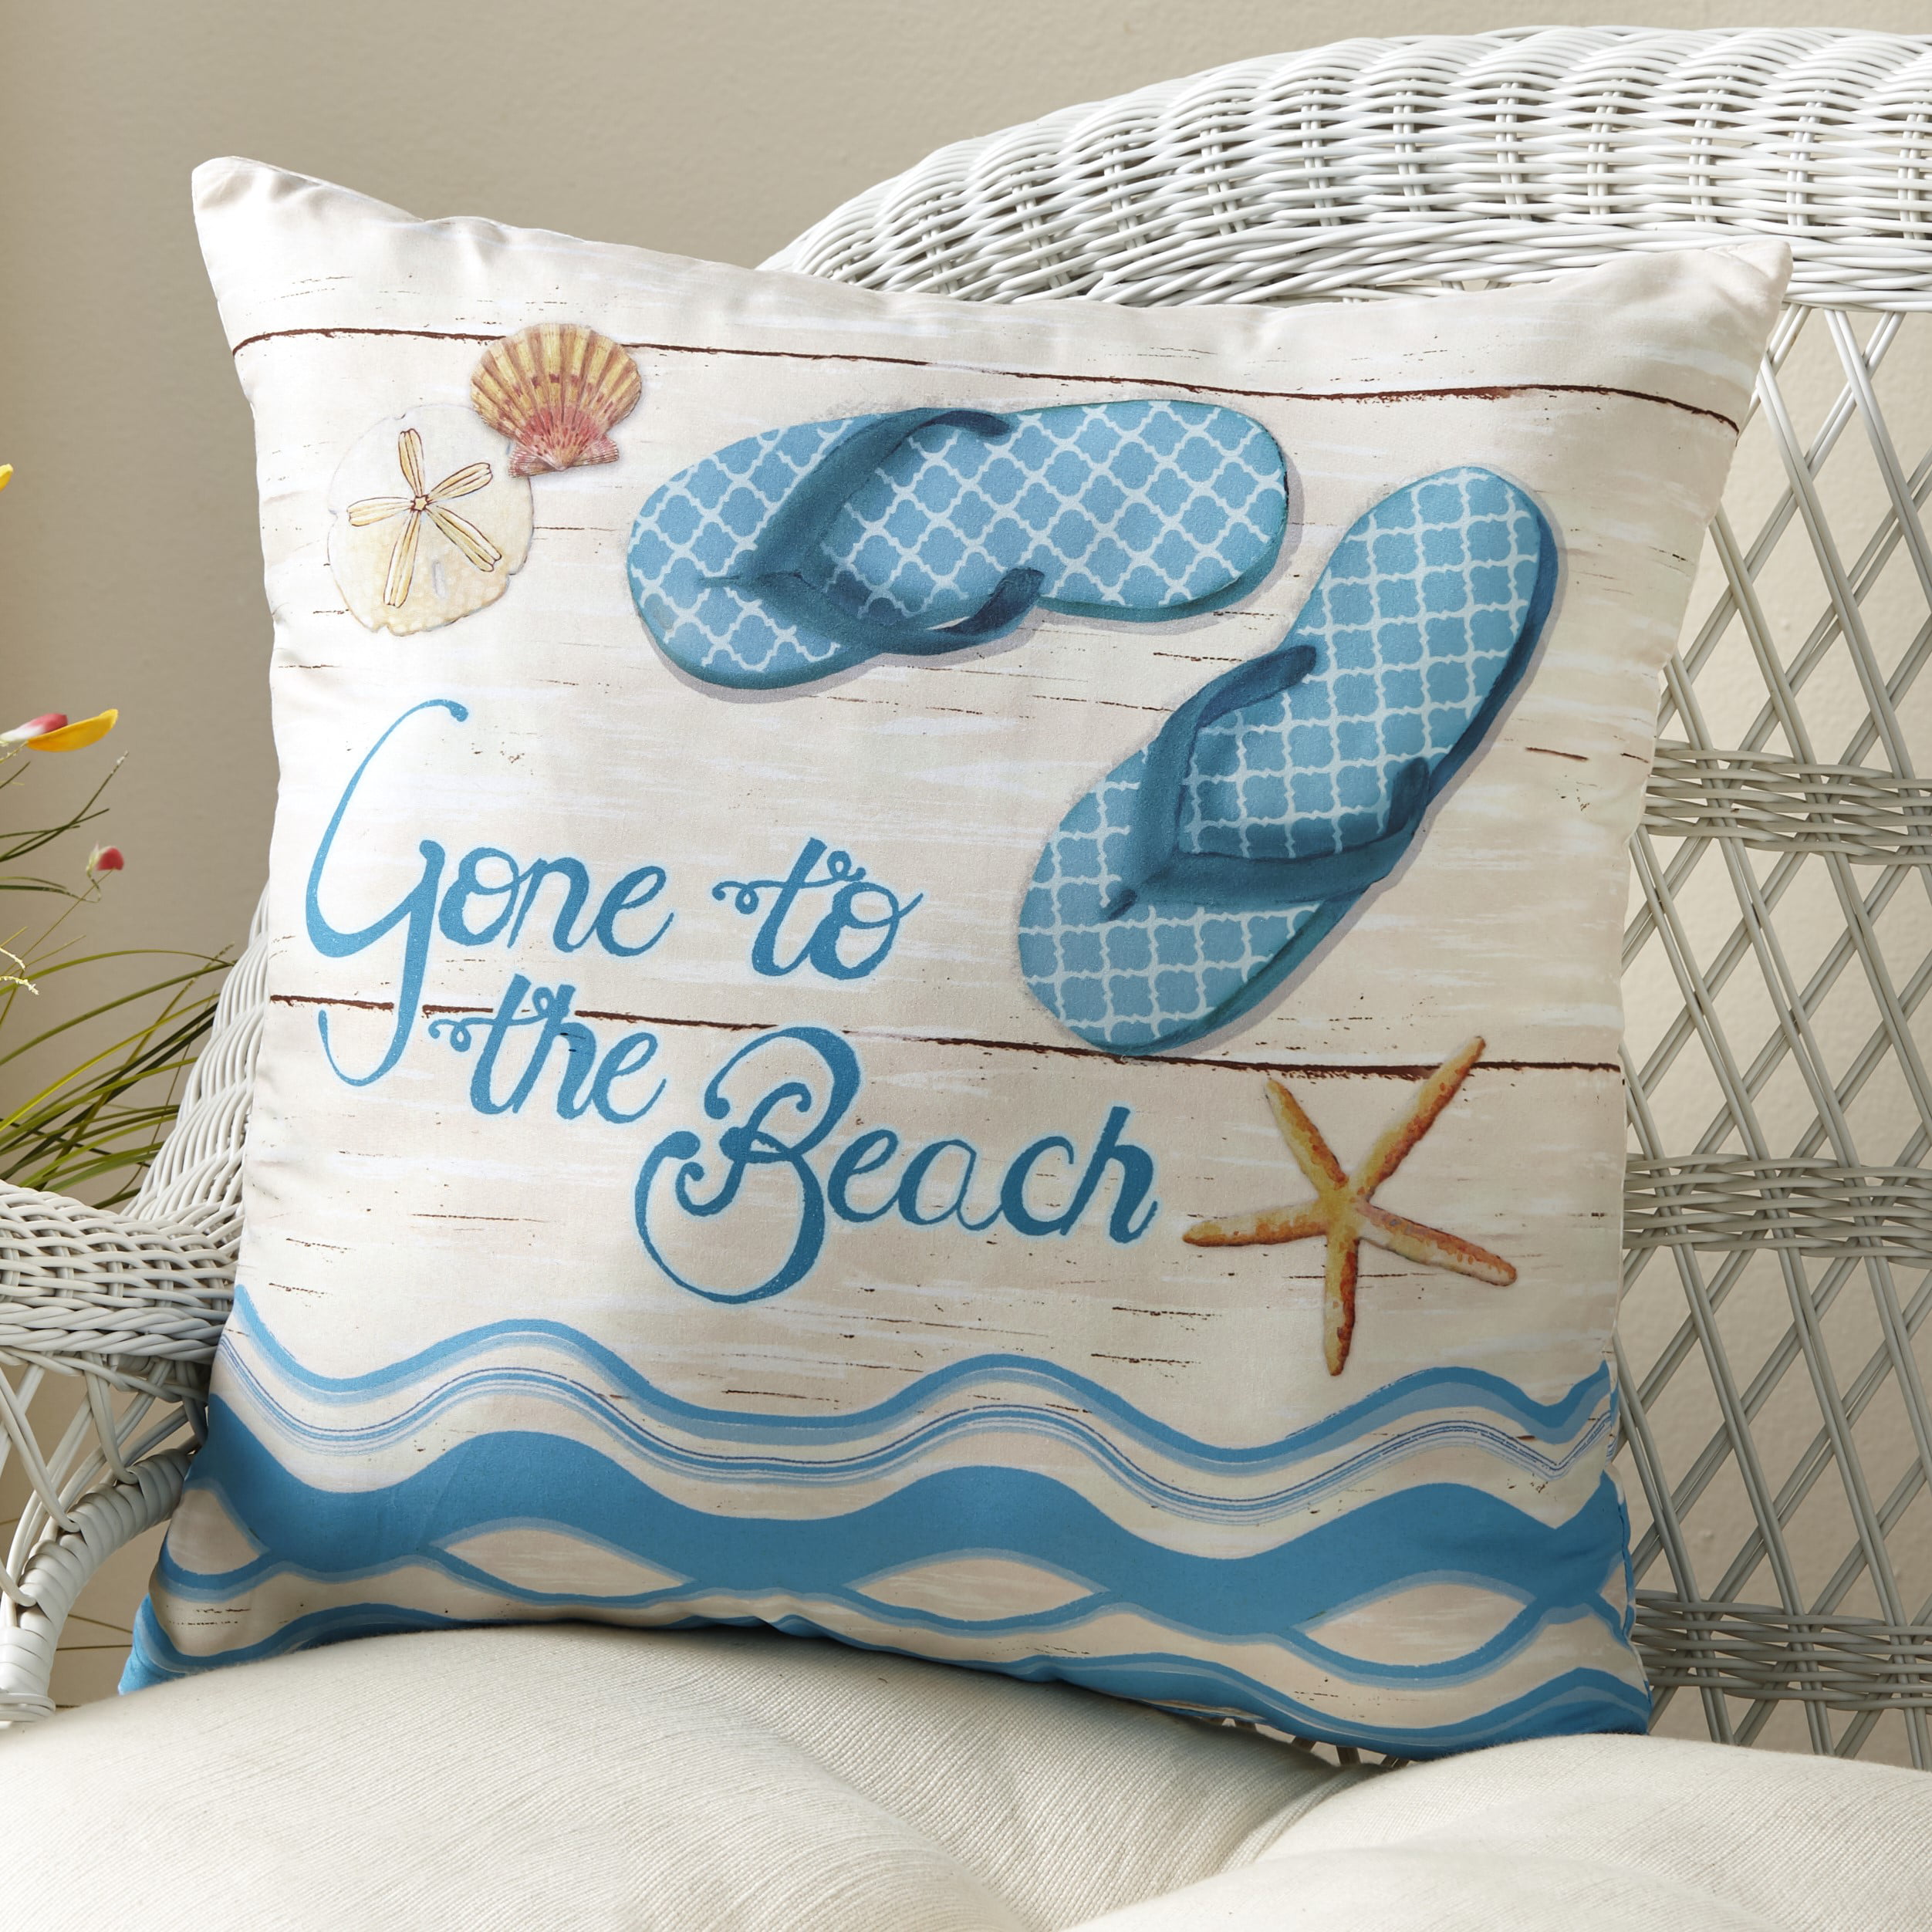 The Beach With Flip Flop Coastal Design, Coastal Theme Outdoor Pillows